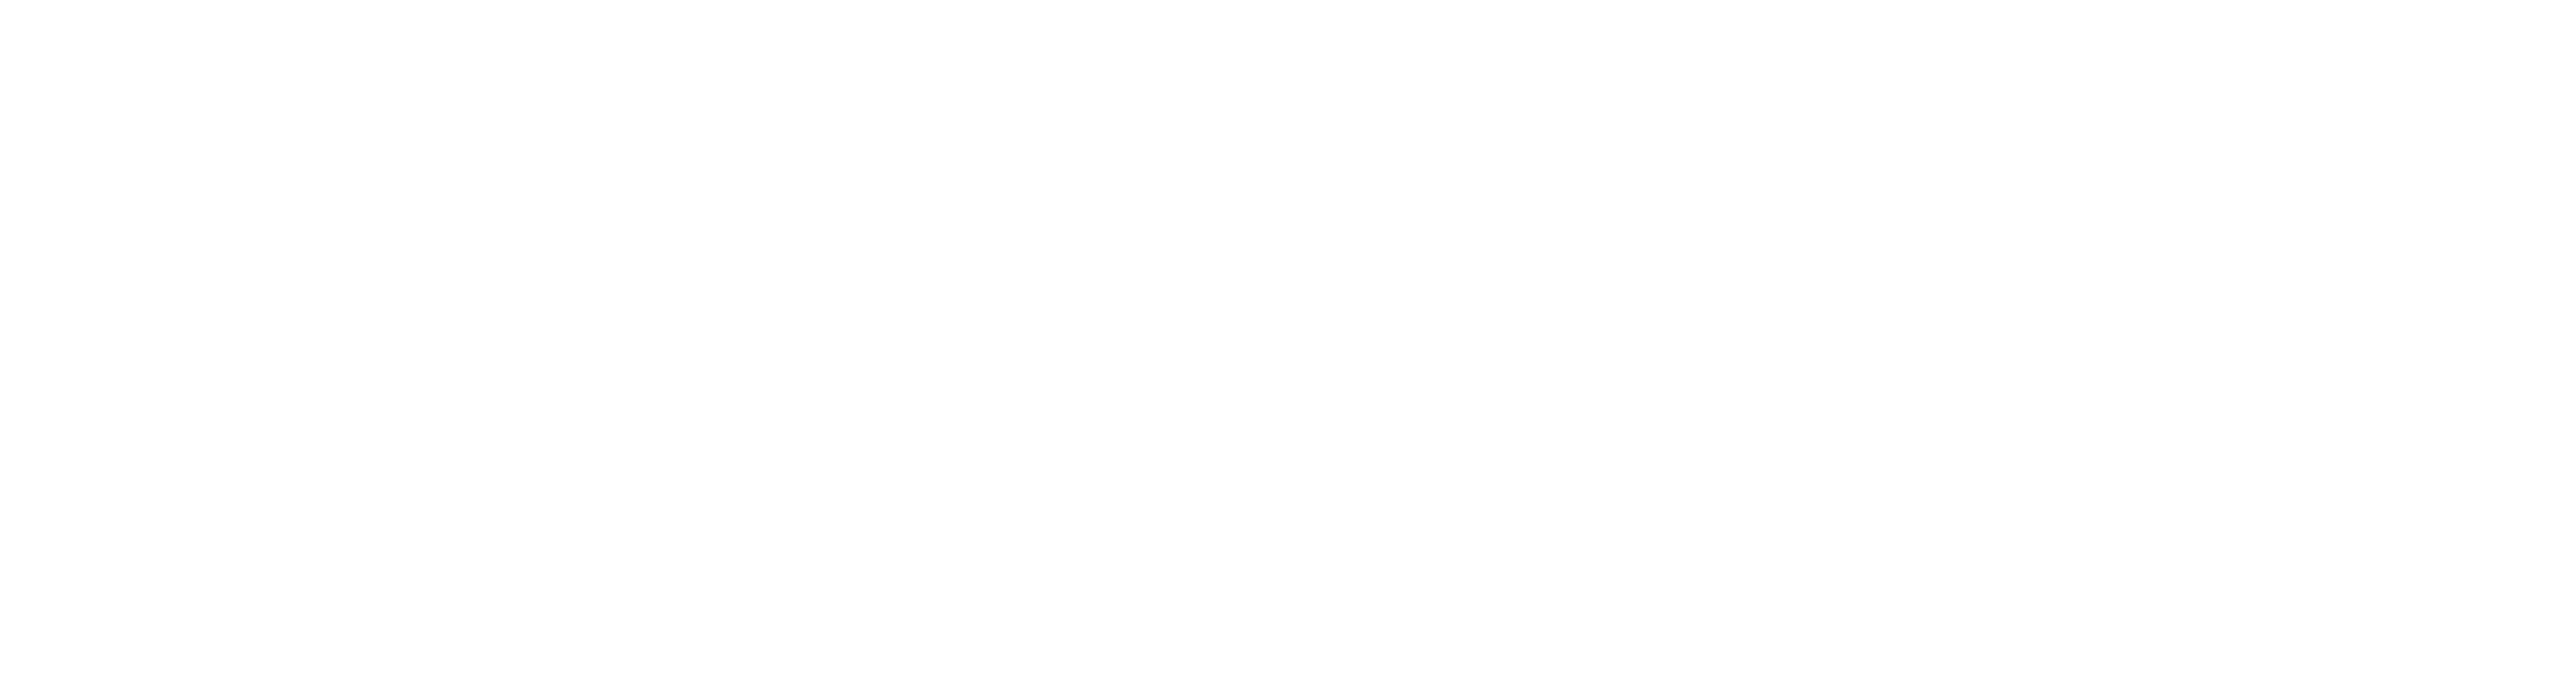 Crystal Horizon